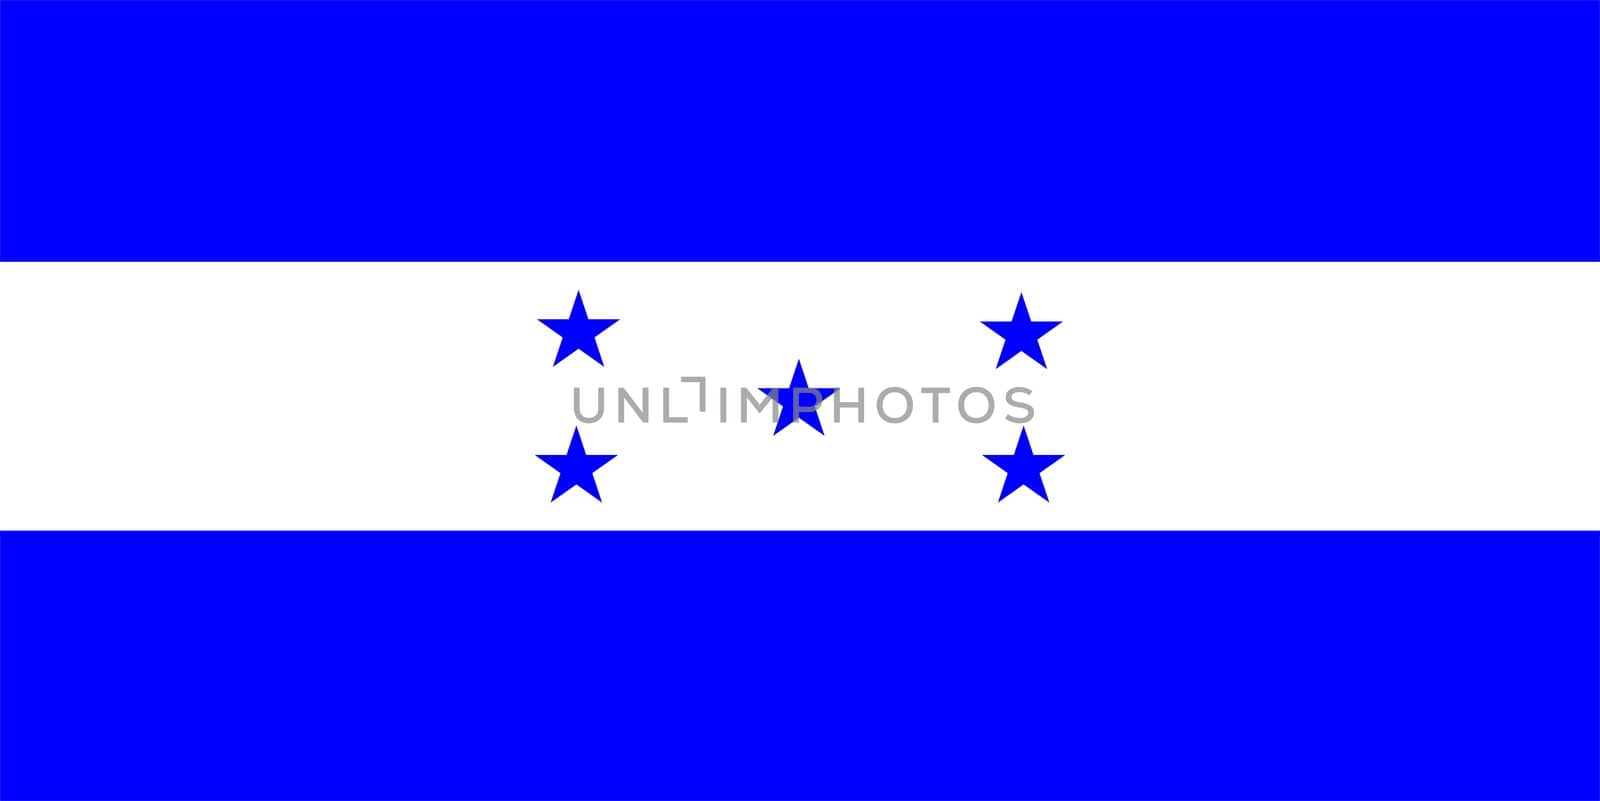 2D illustration of the flag of Honduras vector